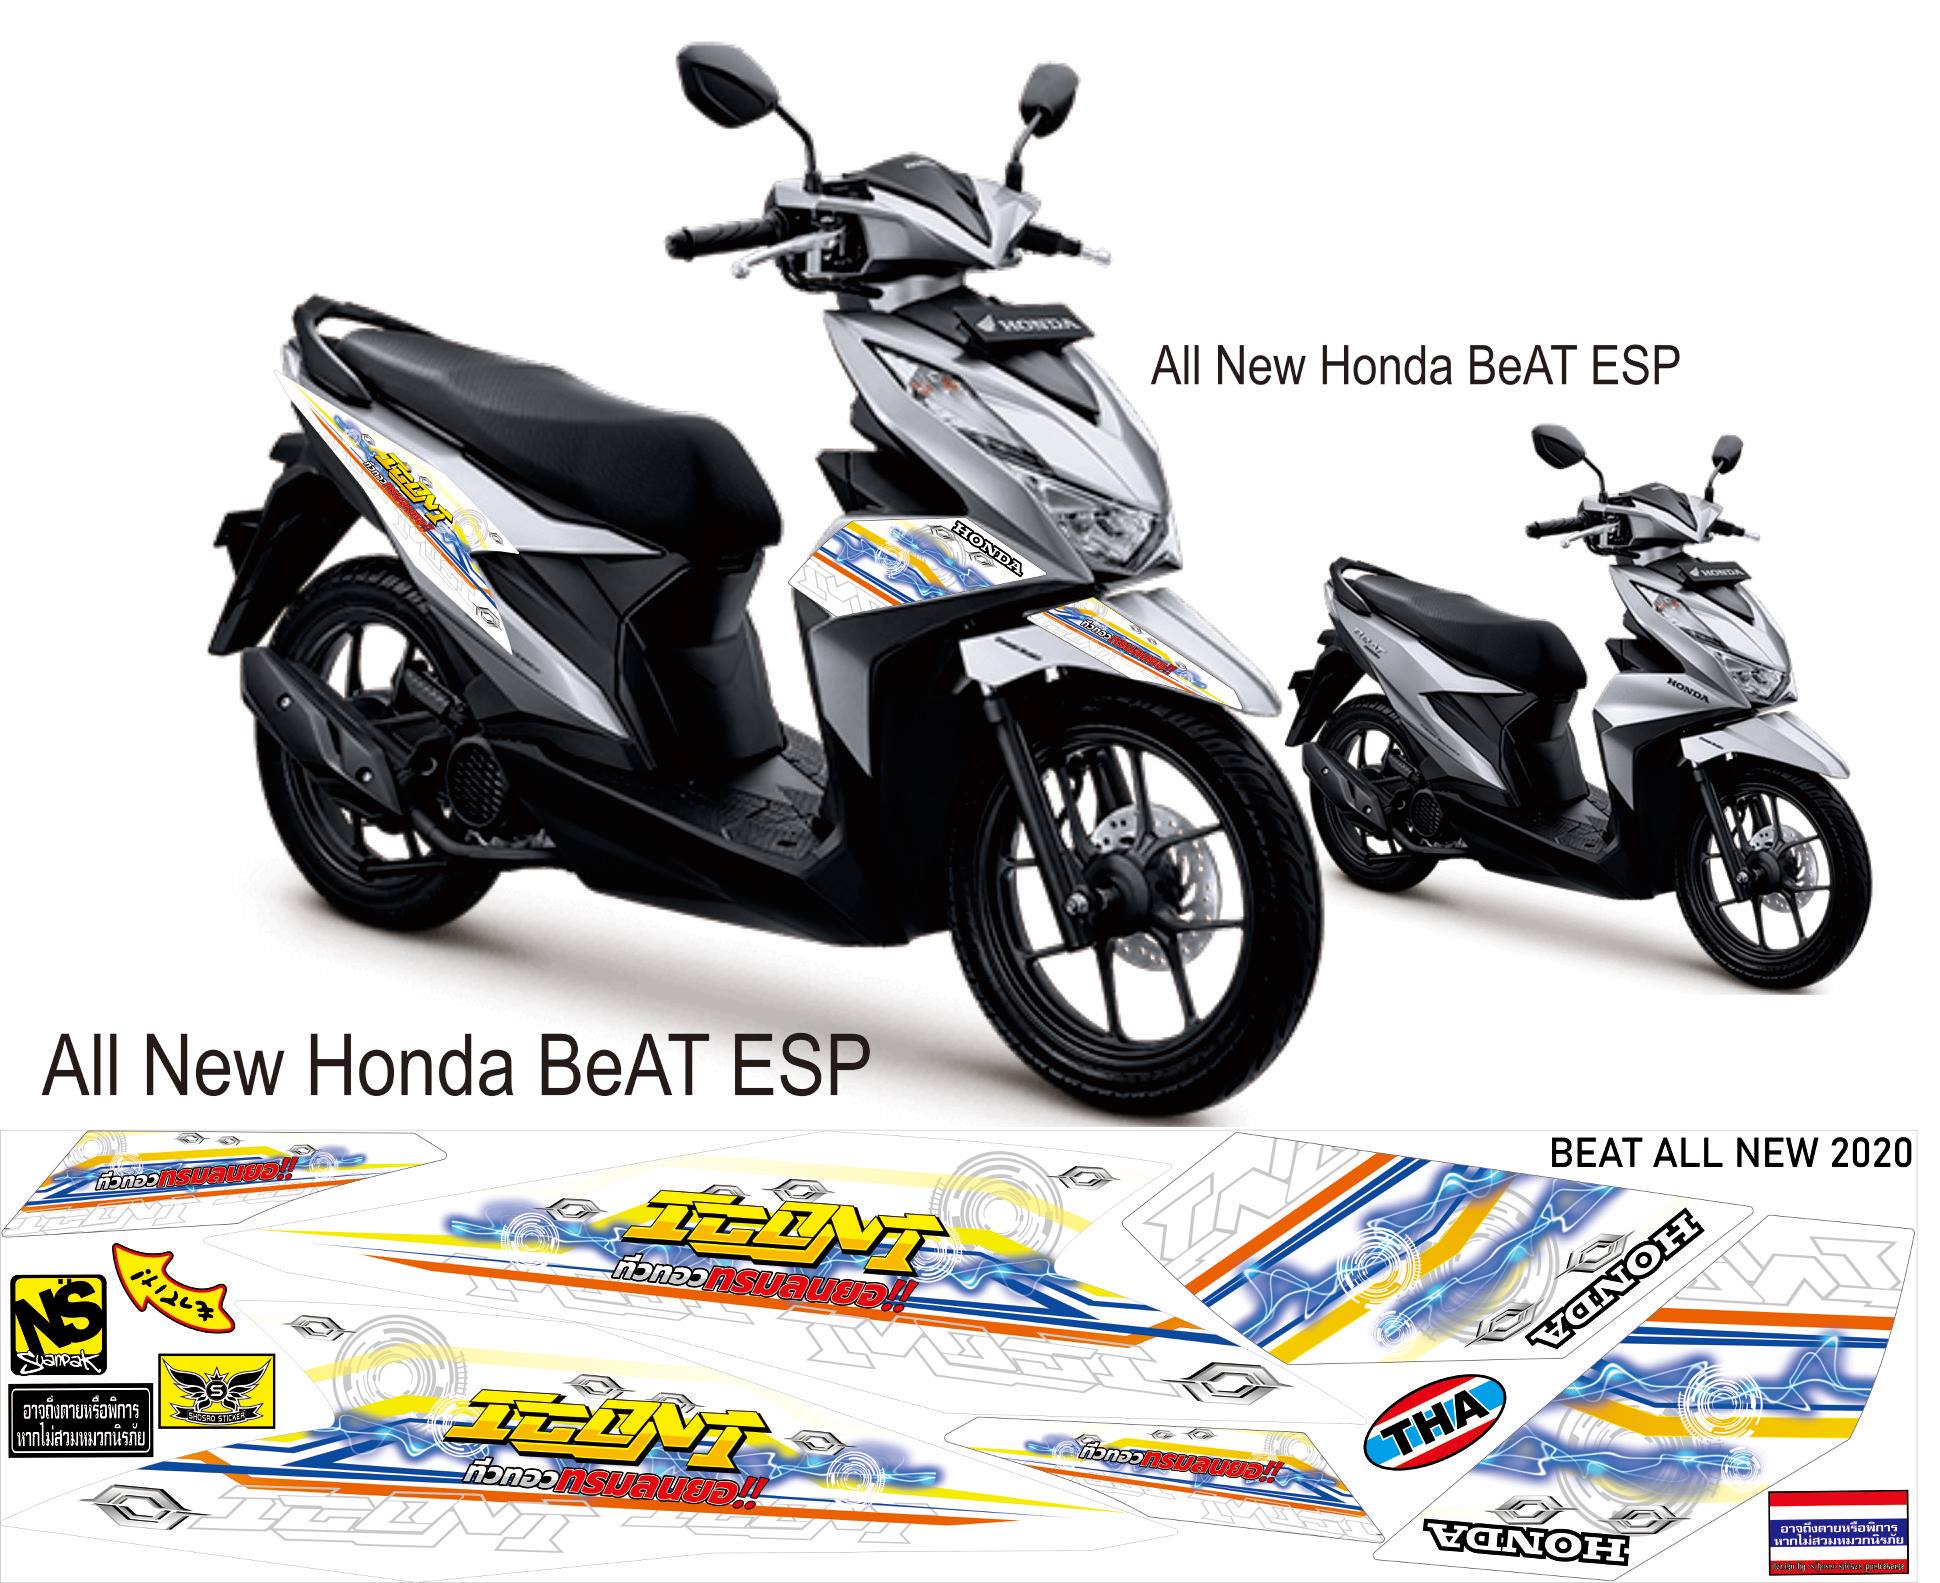 STRIPING VARIASI All New Honda BeAT ESP 2020 ICON THAILAND MOTHAI Lazada Indonesia